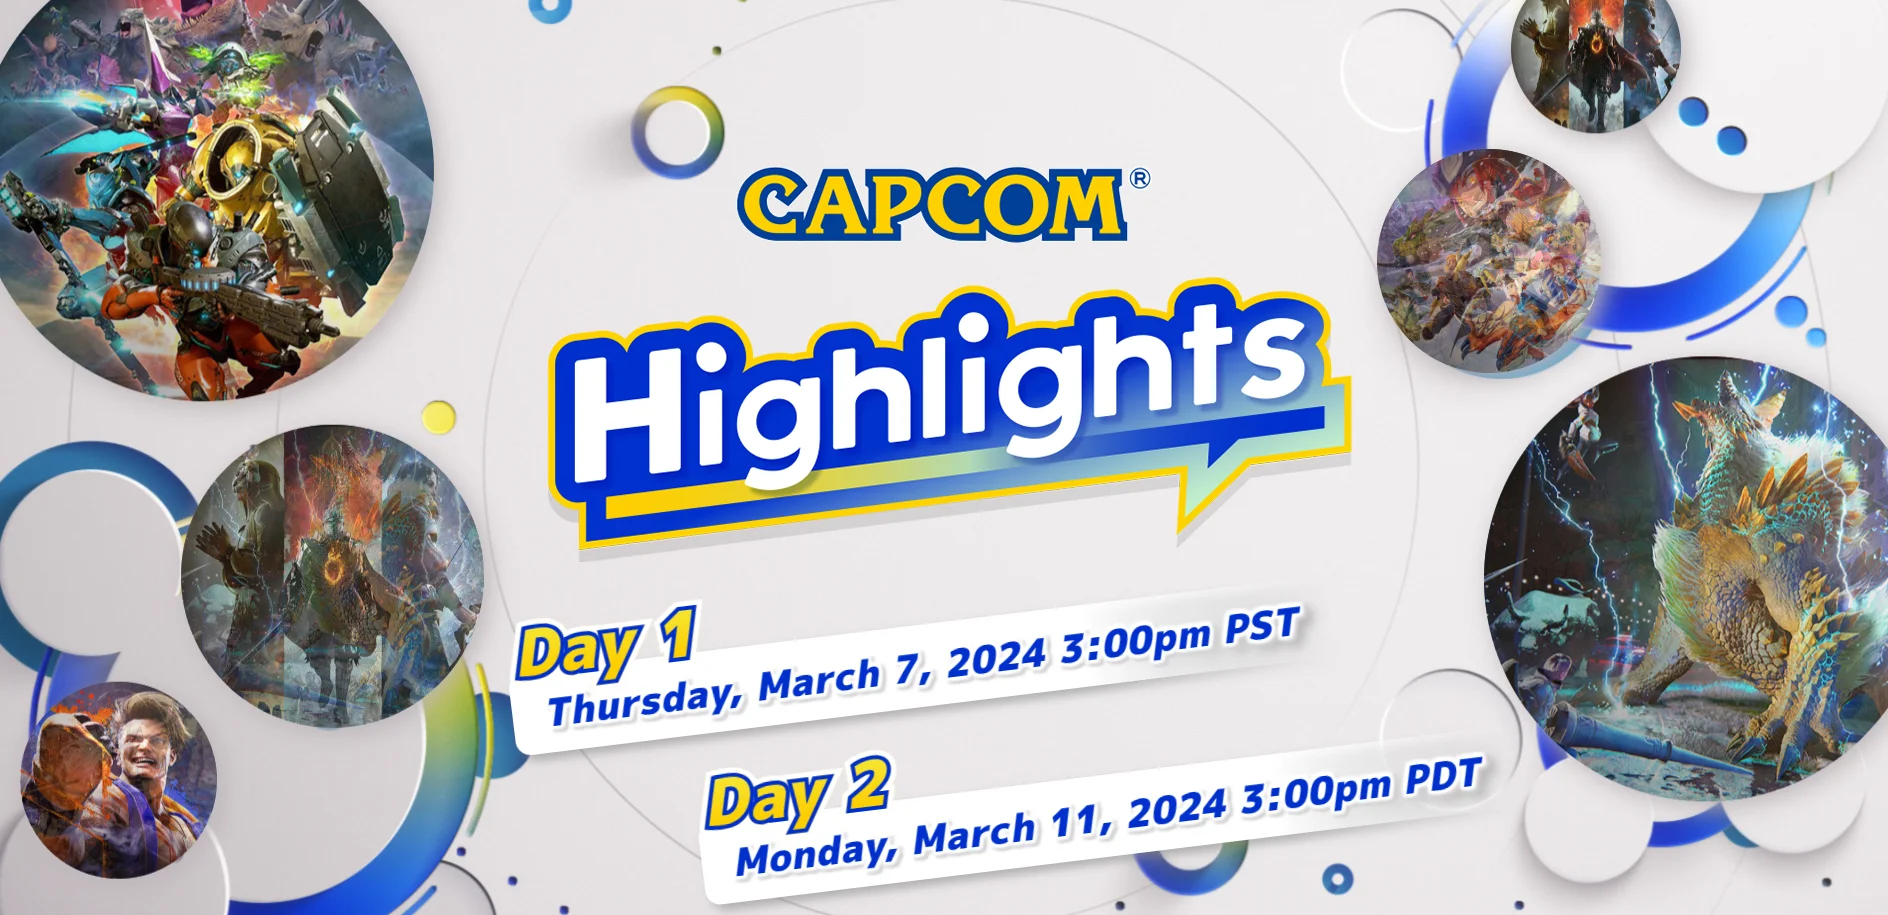 Capcom расскажет о Dragons Dogma 2 и других играх на презентации Highlights - фото 1